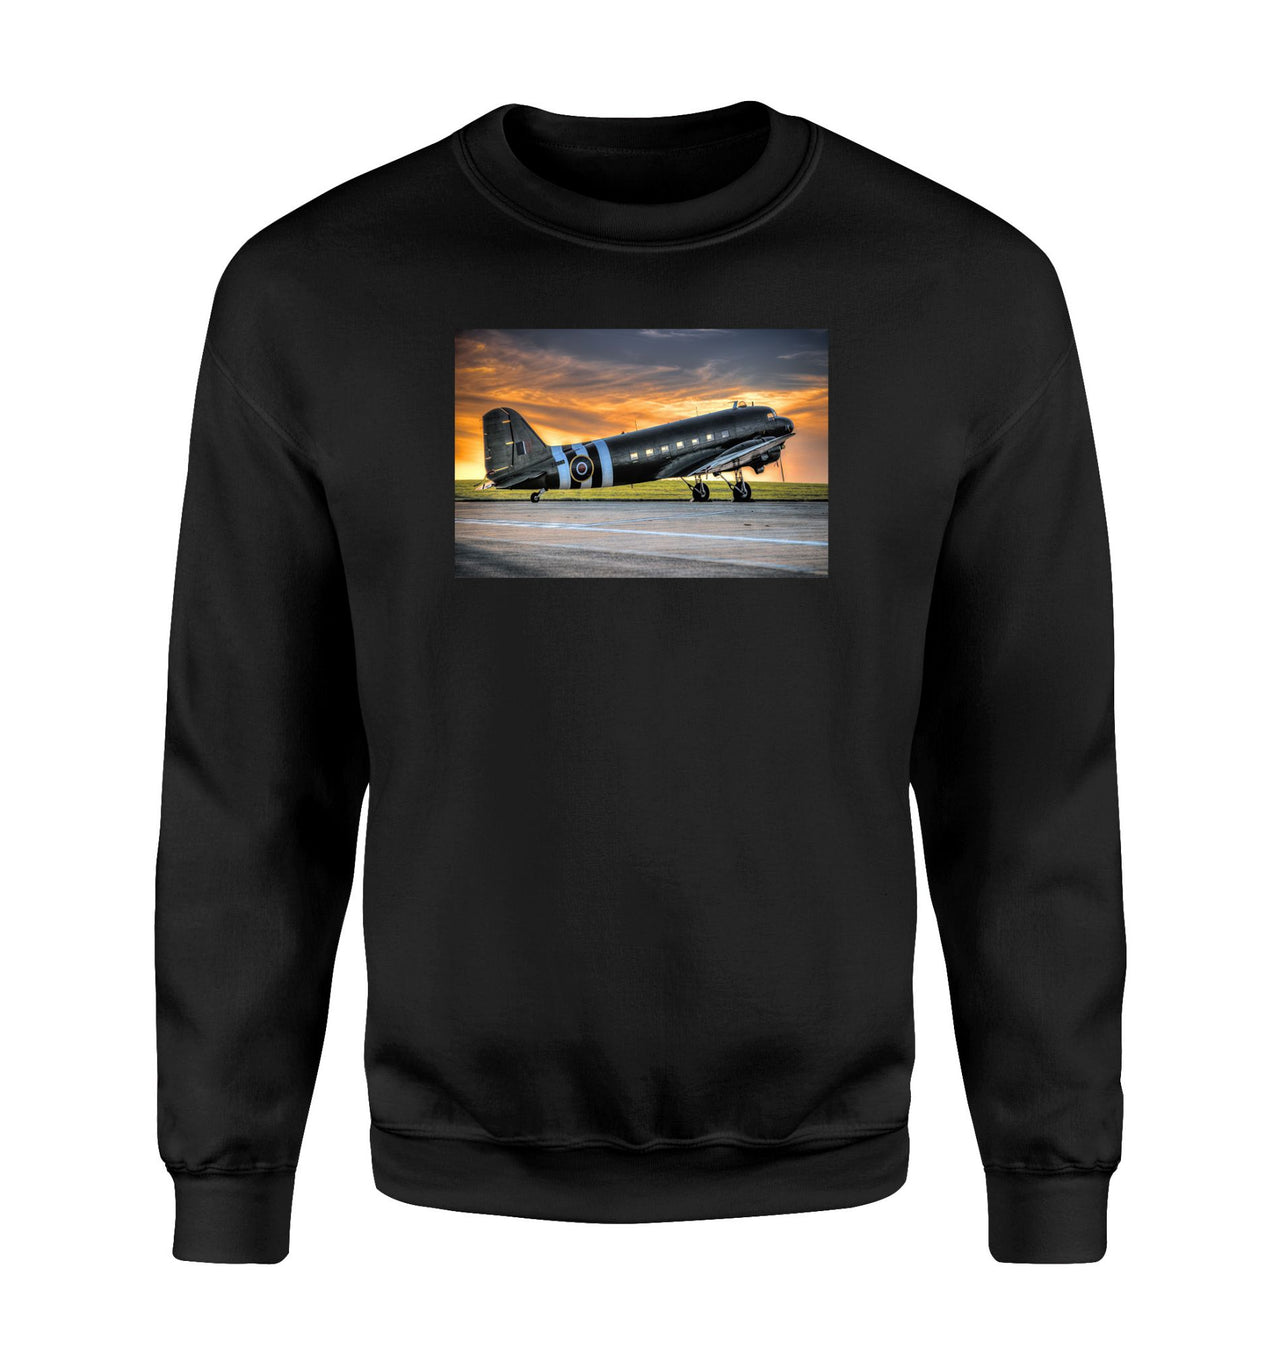 Old Airplane Parked During Sunset Designed Sweatshirts